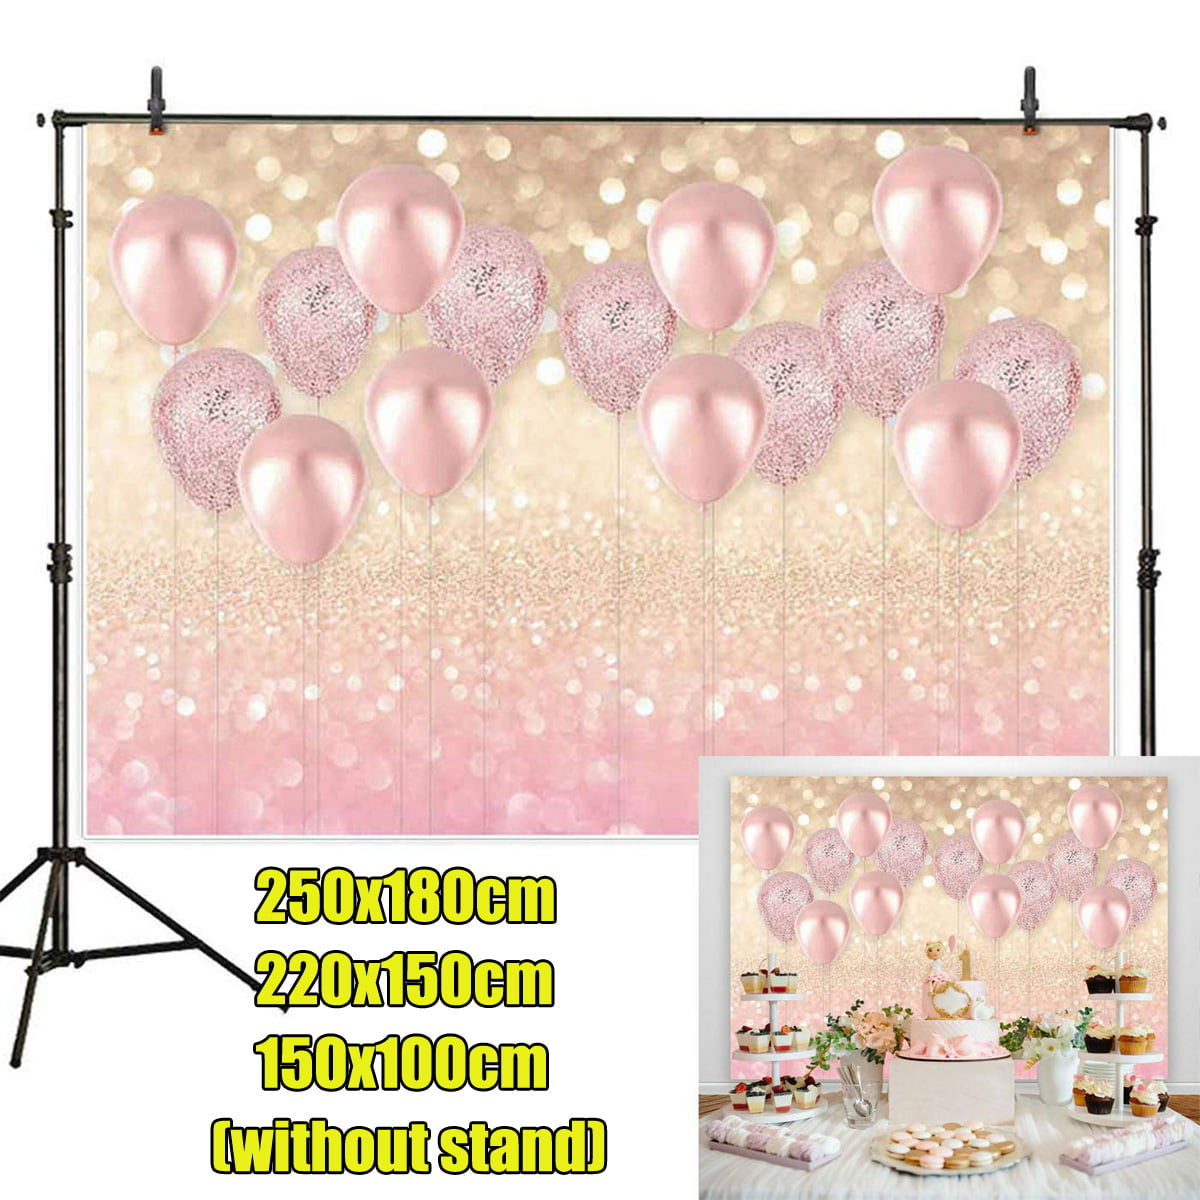 5x3ft Pink Party Backdrop Polyester Photography Background Beautiful Cake Flowers Dessert Indoor Decors Wallpaper Children Kids Portrait Photo Vedio Studio Props 